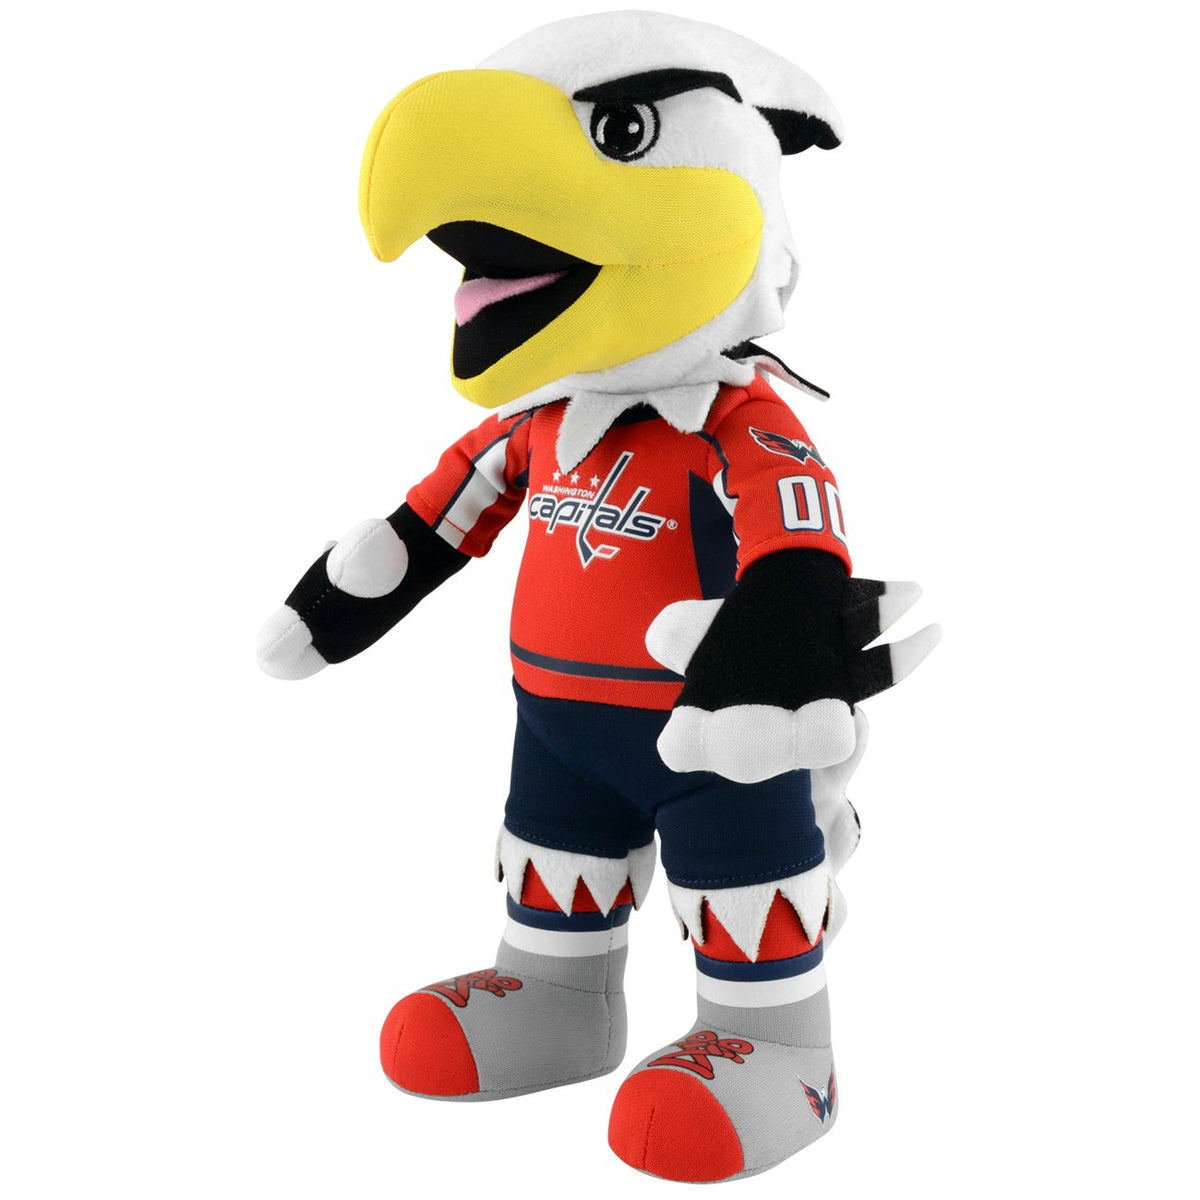 Slapshot Washington Capitals 2023 Stadium Series Mascot Bobblehead Officially Licensed by NHL